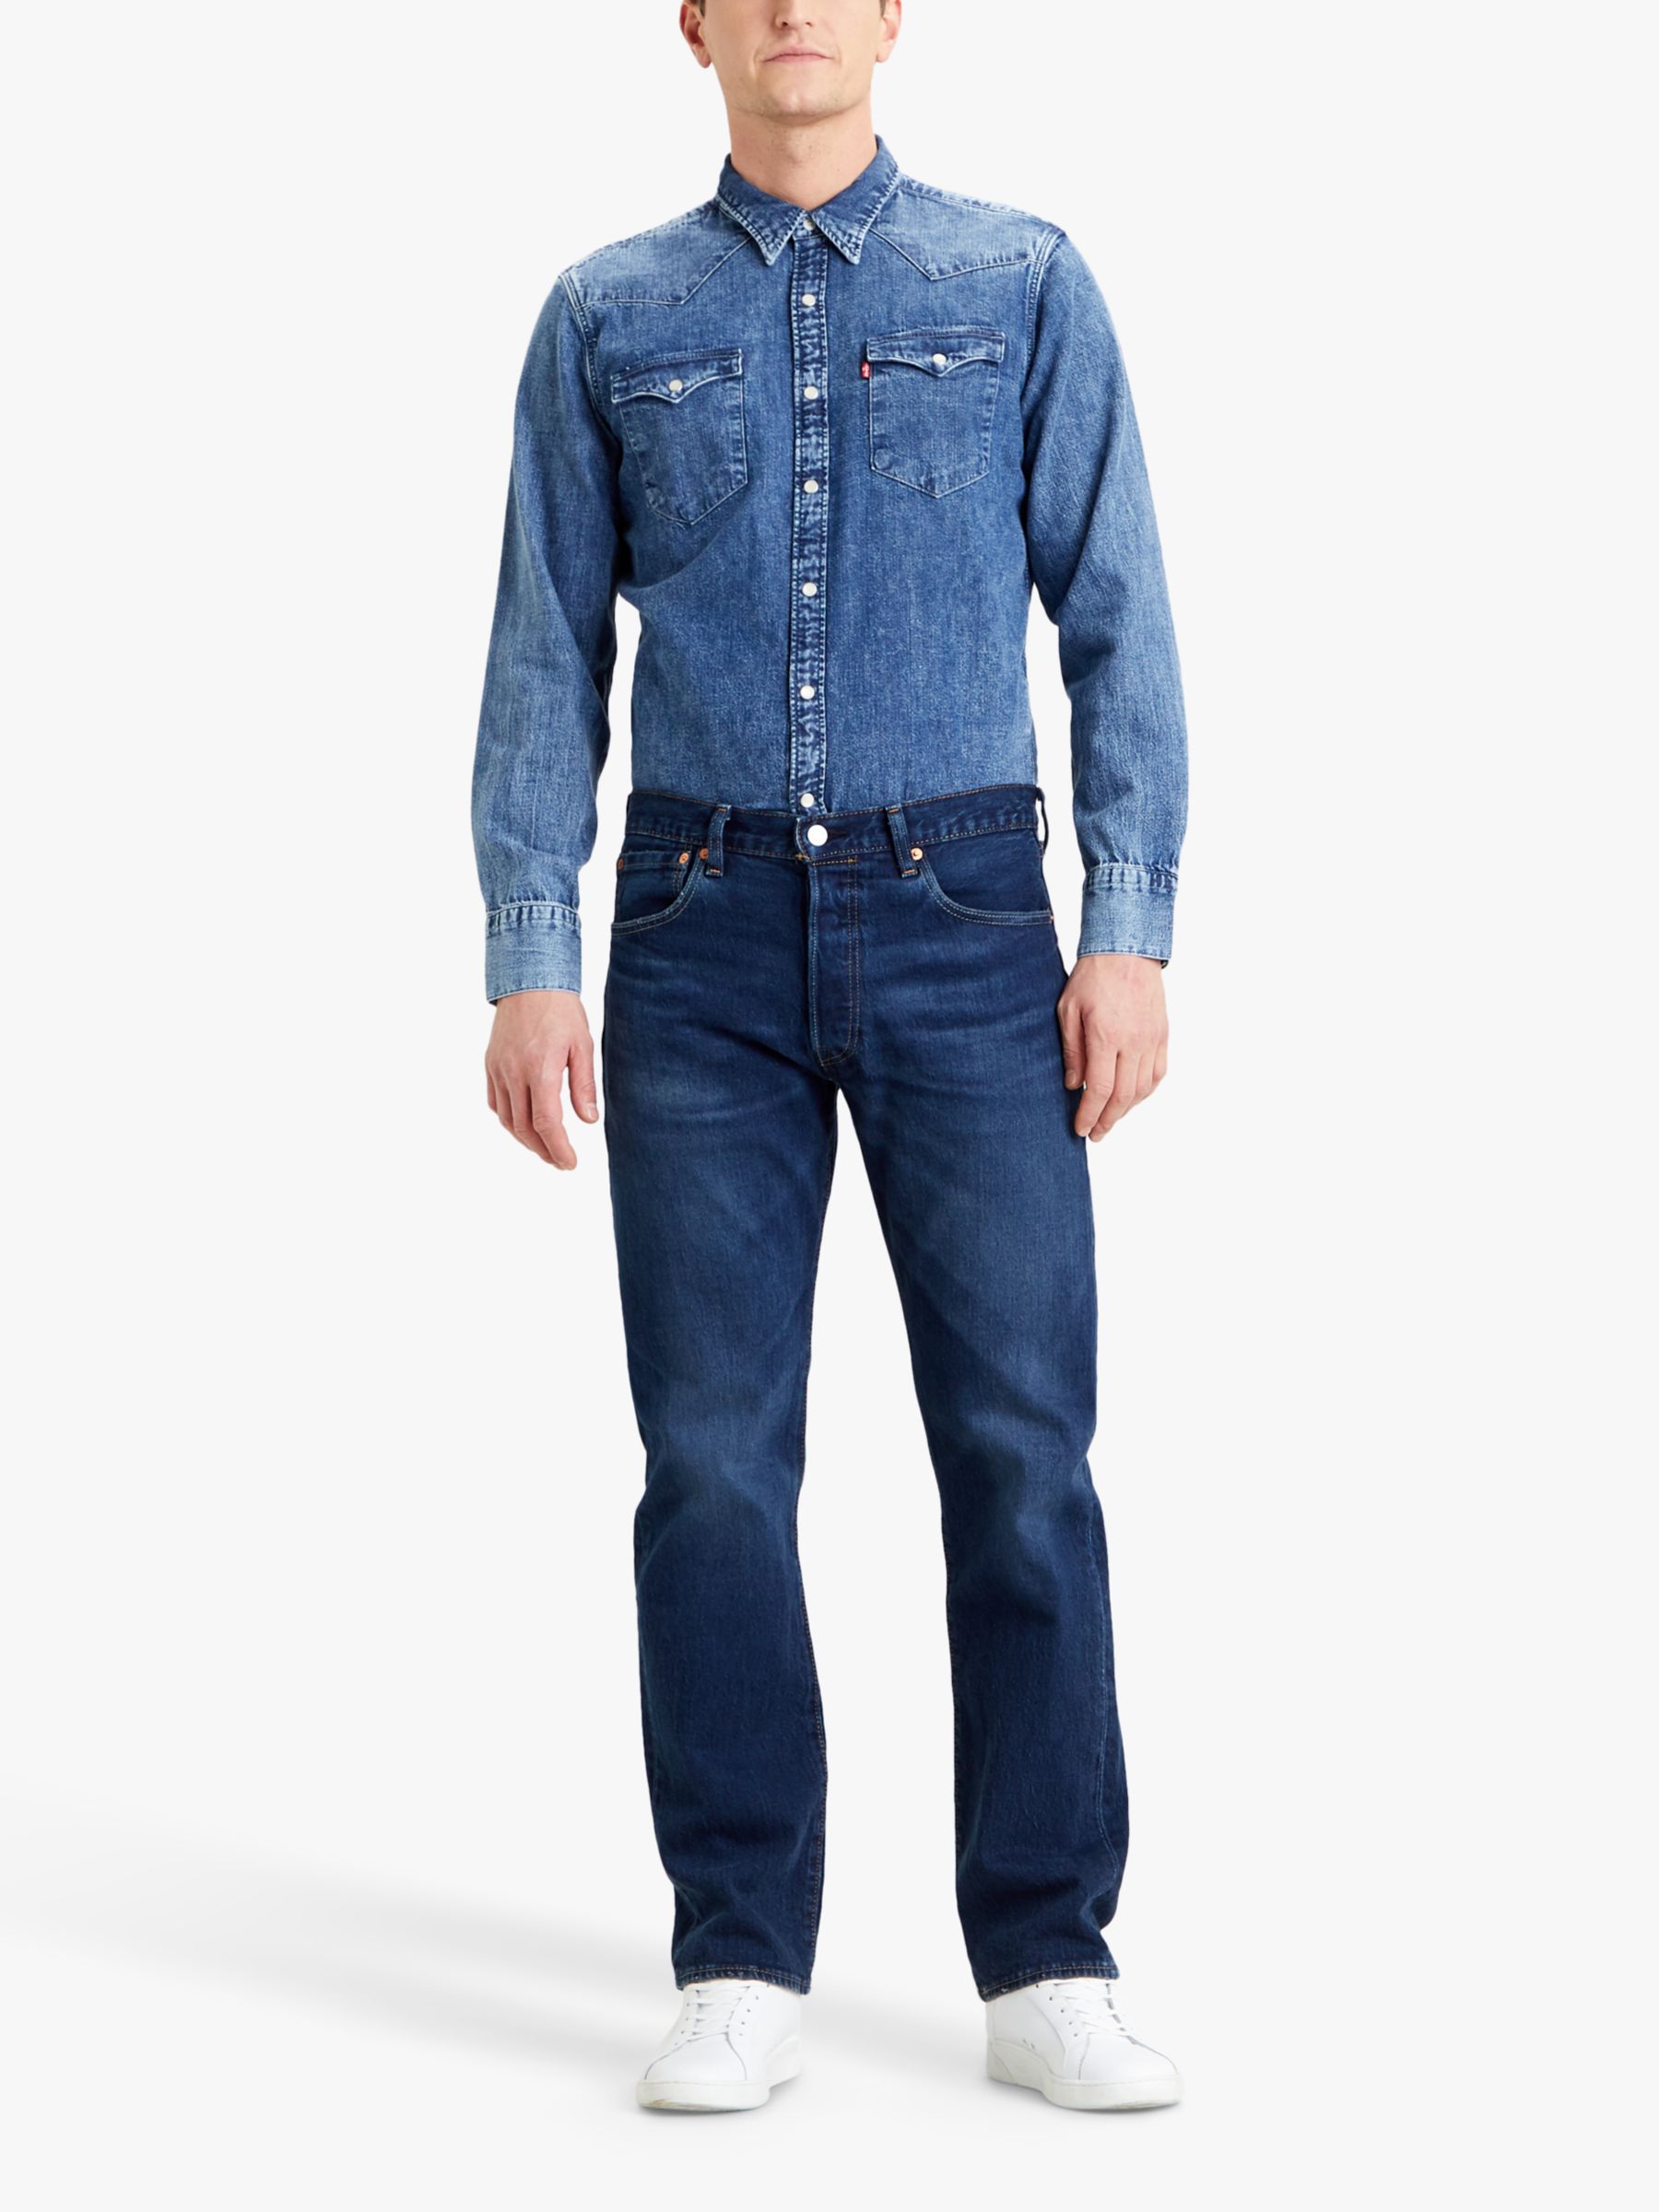 Levi's 501 Original Straight Jeans, Mid Blue at John Lewis & Partners